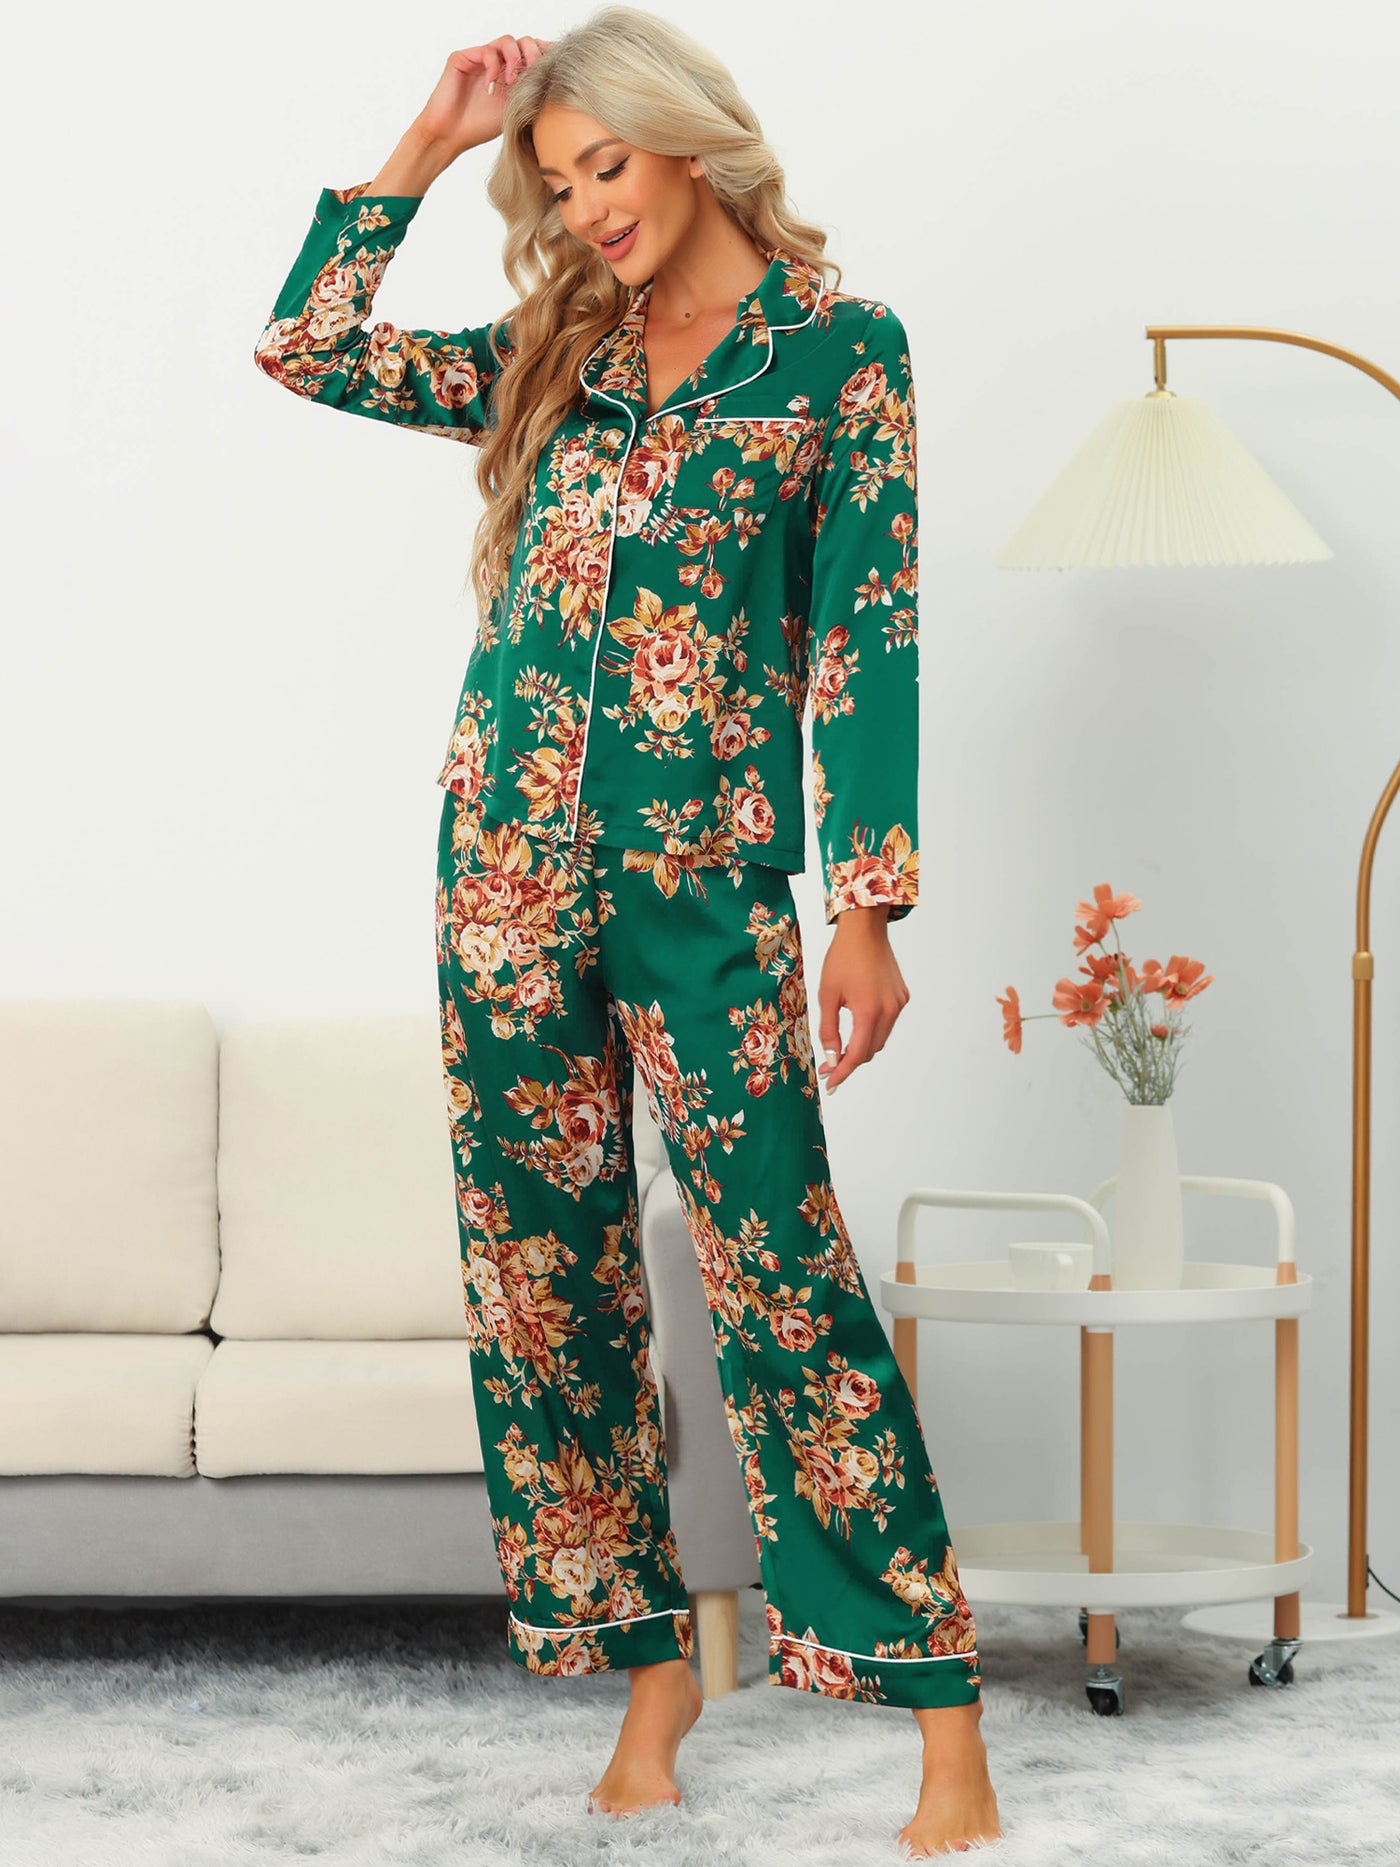 Bublédon Women's Sleep Nightwear Sleepwear Lounge Satin Pajama Sets